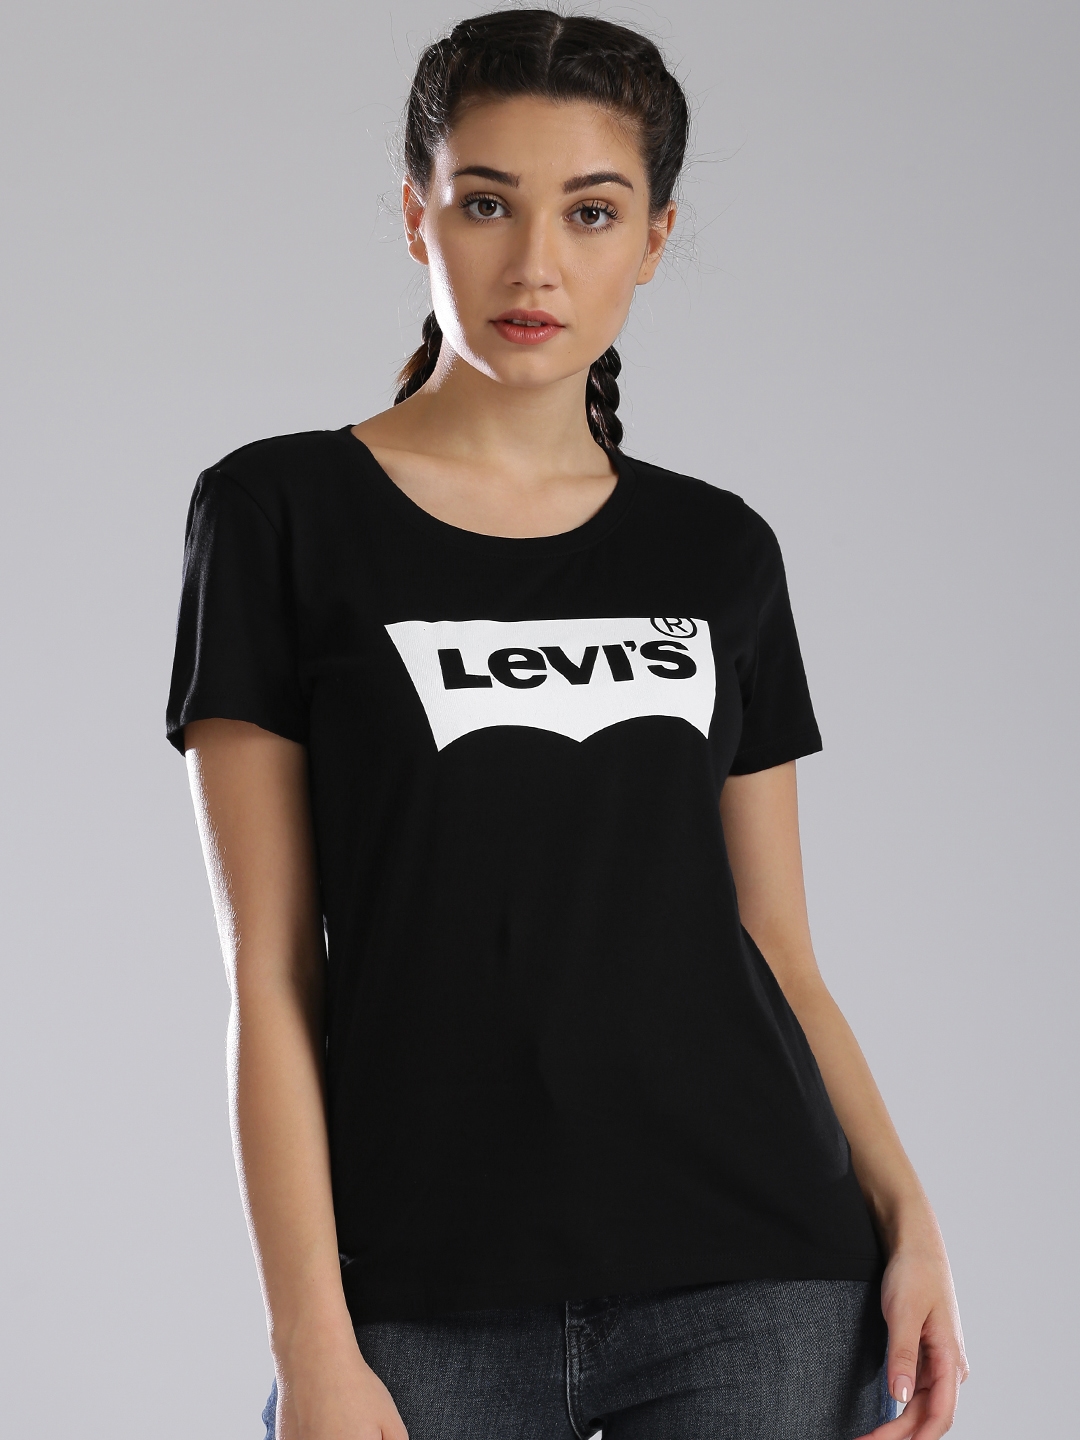 Levis T Shirt Women Black Germany, Save 51% - Piv-Phuket.Com